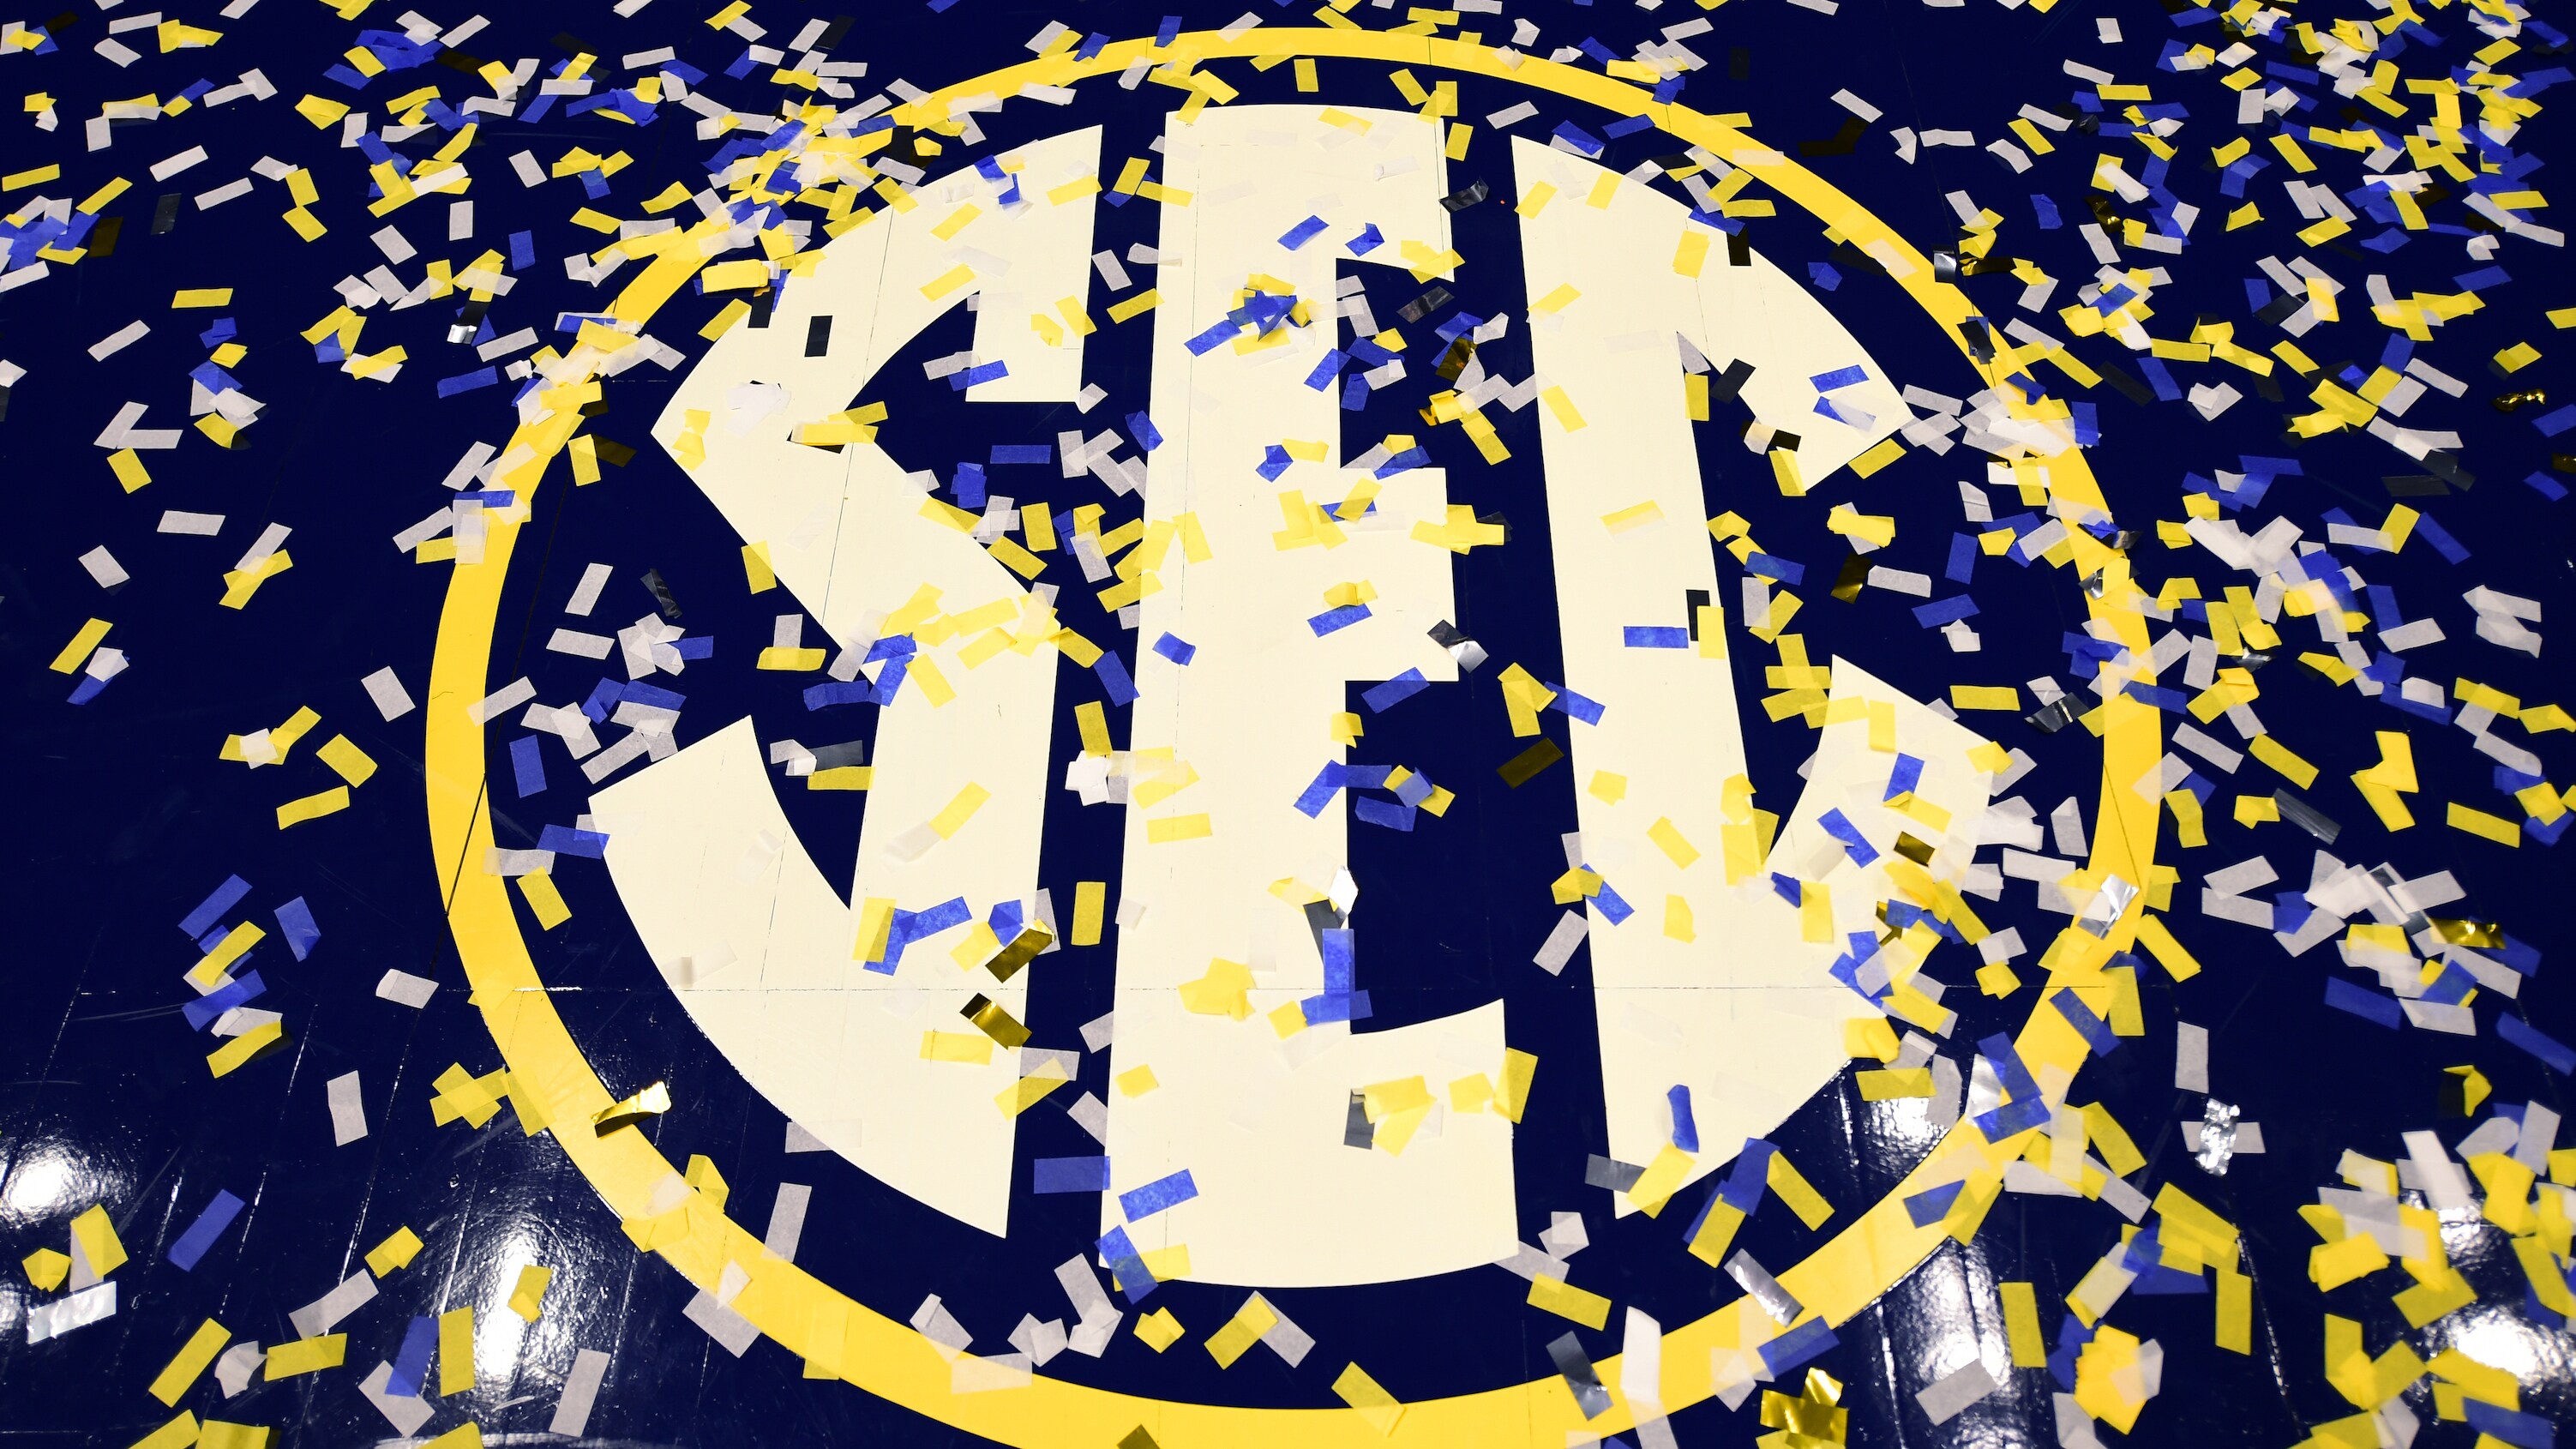 Nashville, TN - March 13, 2016 - Bridgestone Arena: The SEC logo during the 2016 SEC Men's Basketball Tournament (Photo by Phil Ellsworth / ESPN Images)